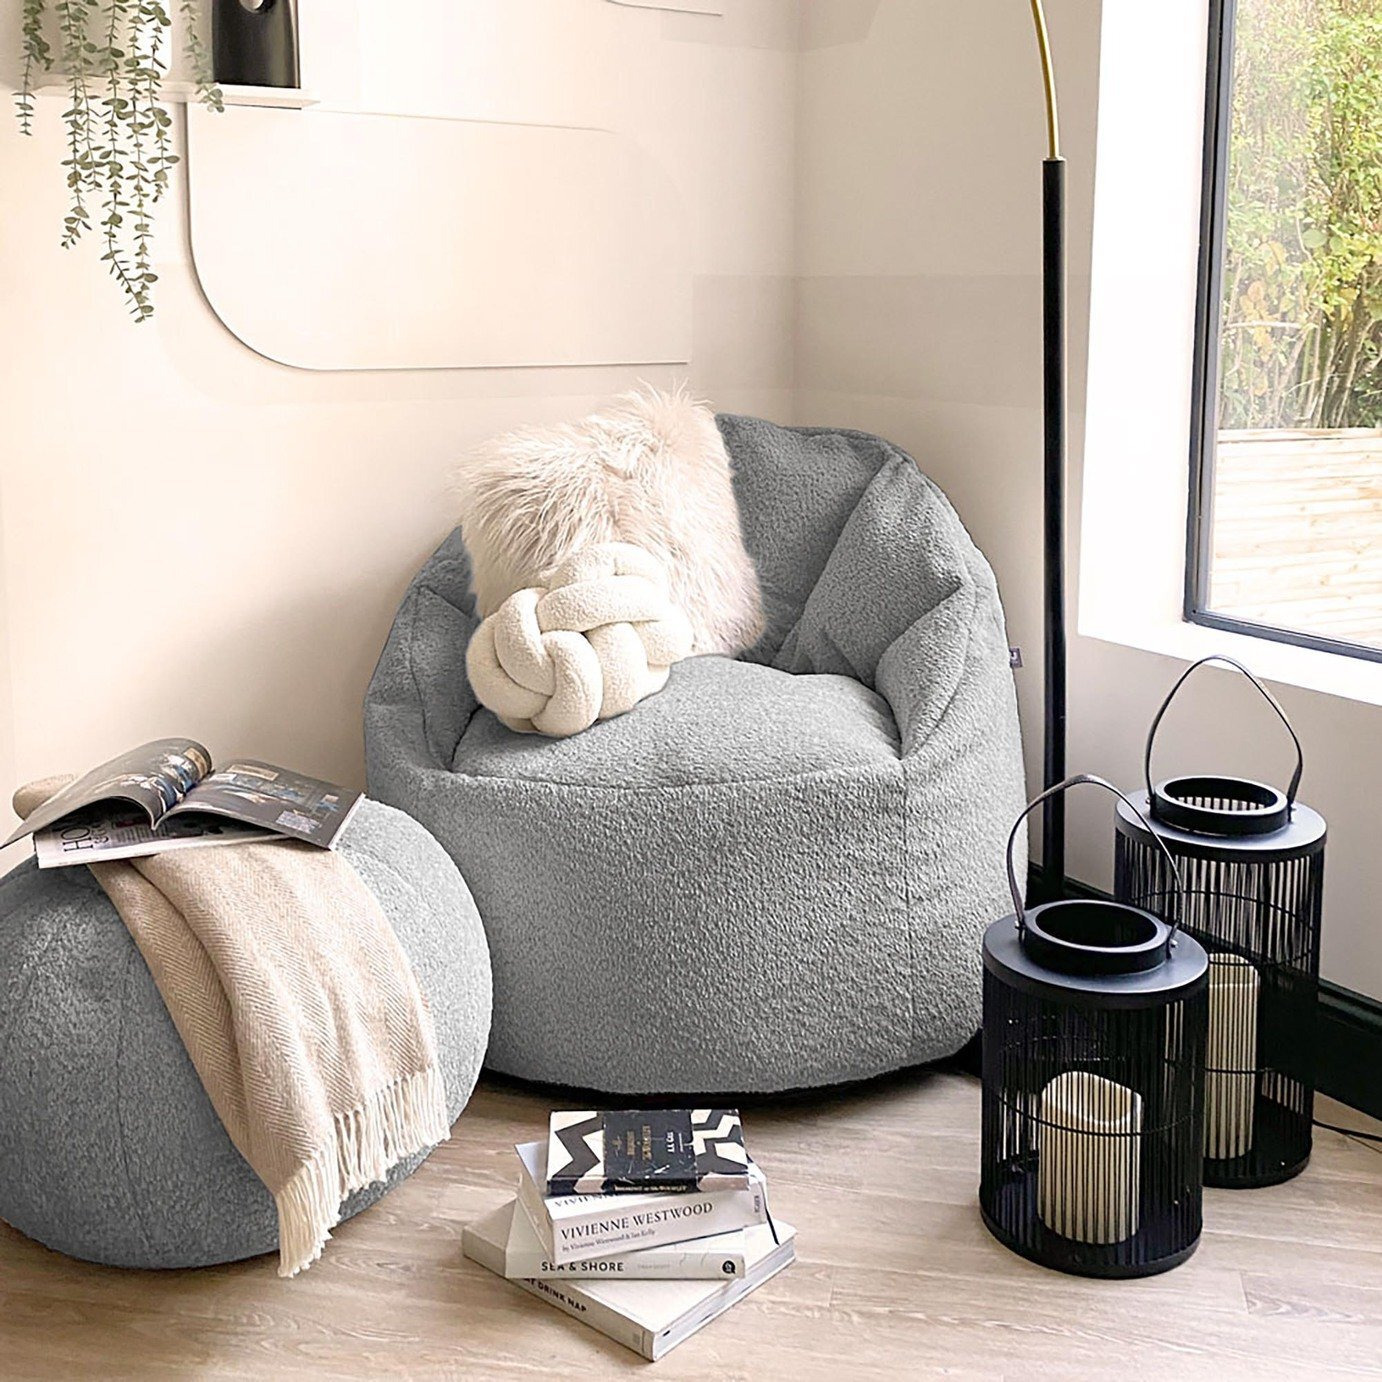 rucomfy Fabric Snug Cinema Bean Bag Chair - Grey - image 1